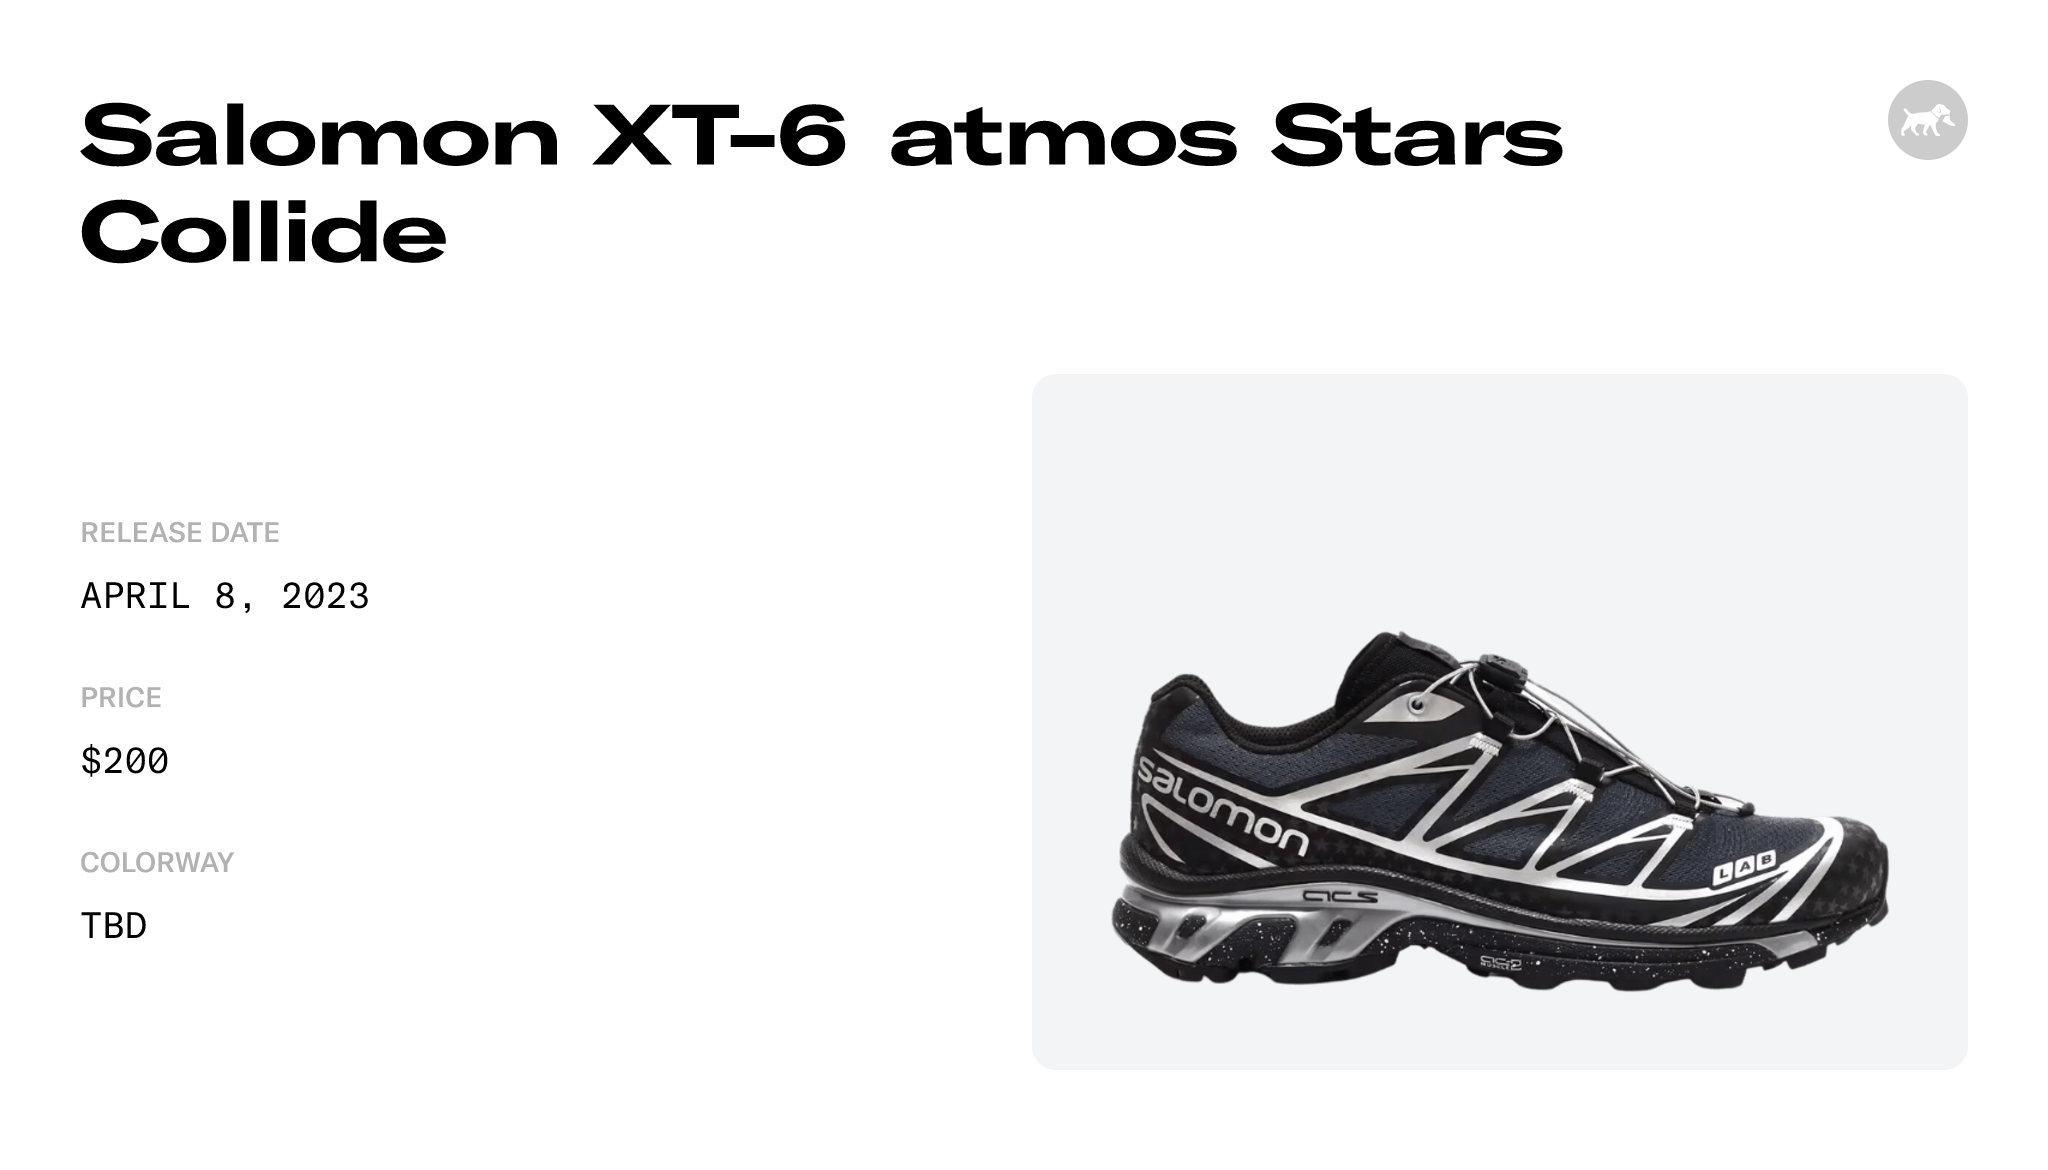 atmos Salomon XT-6 Stars Collide Release Date